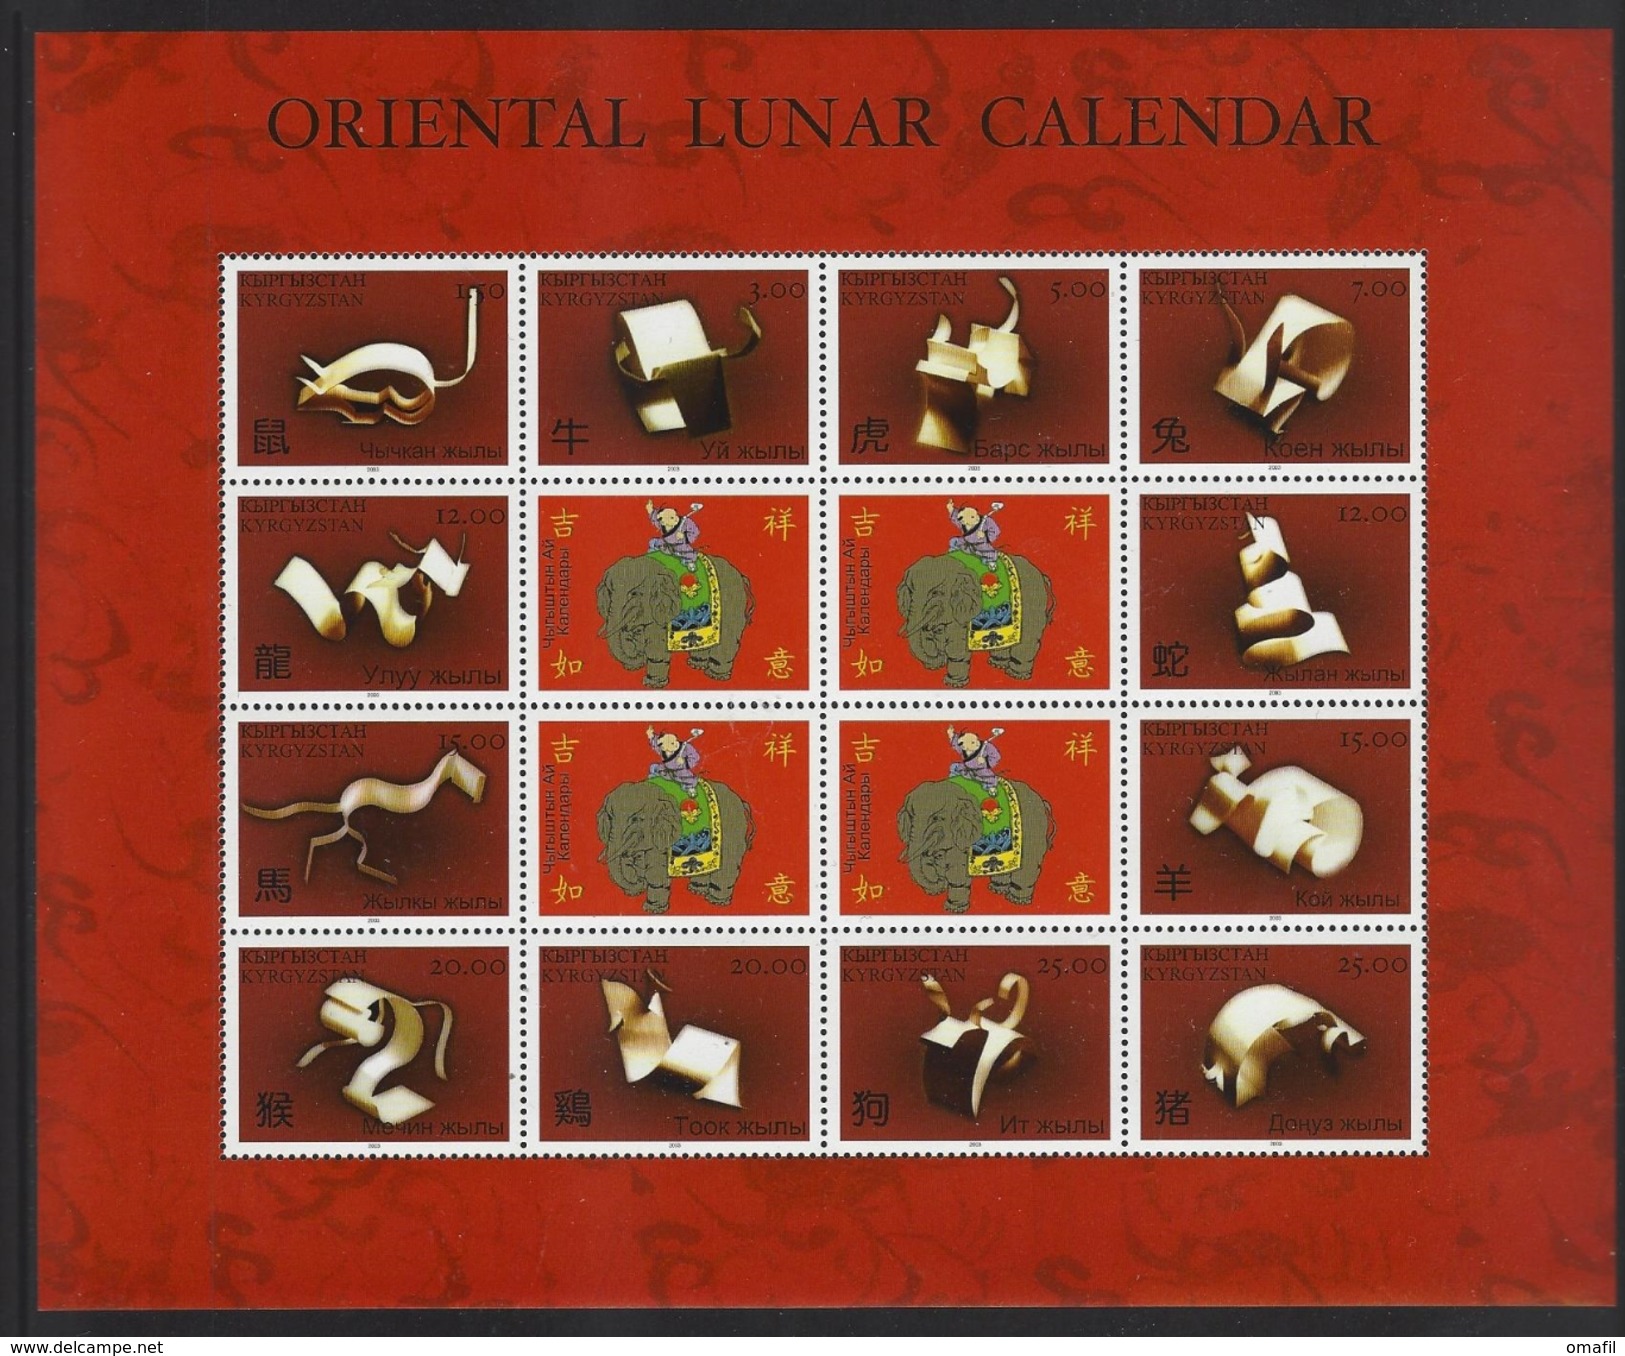 Chinese Kalender Kyrgystan - Astrology